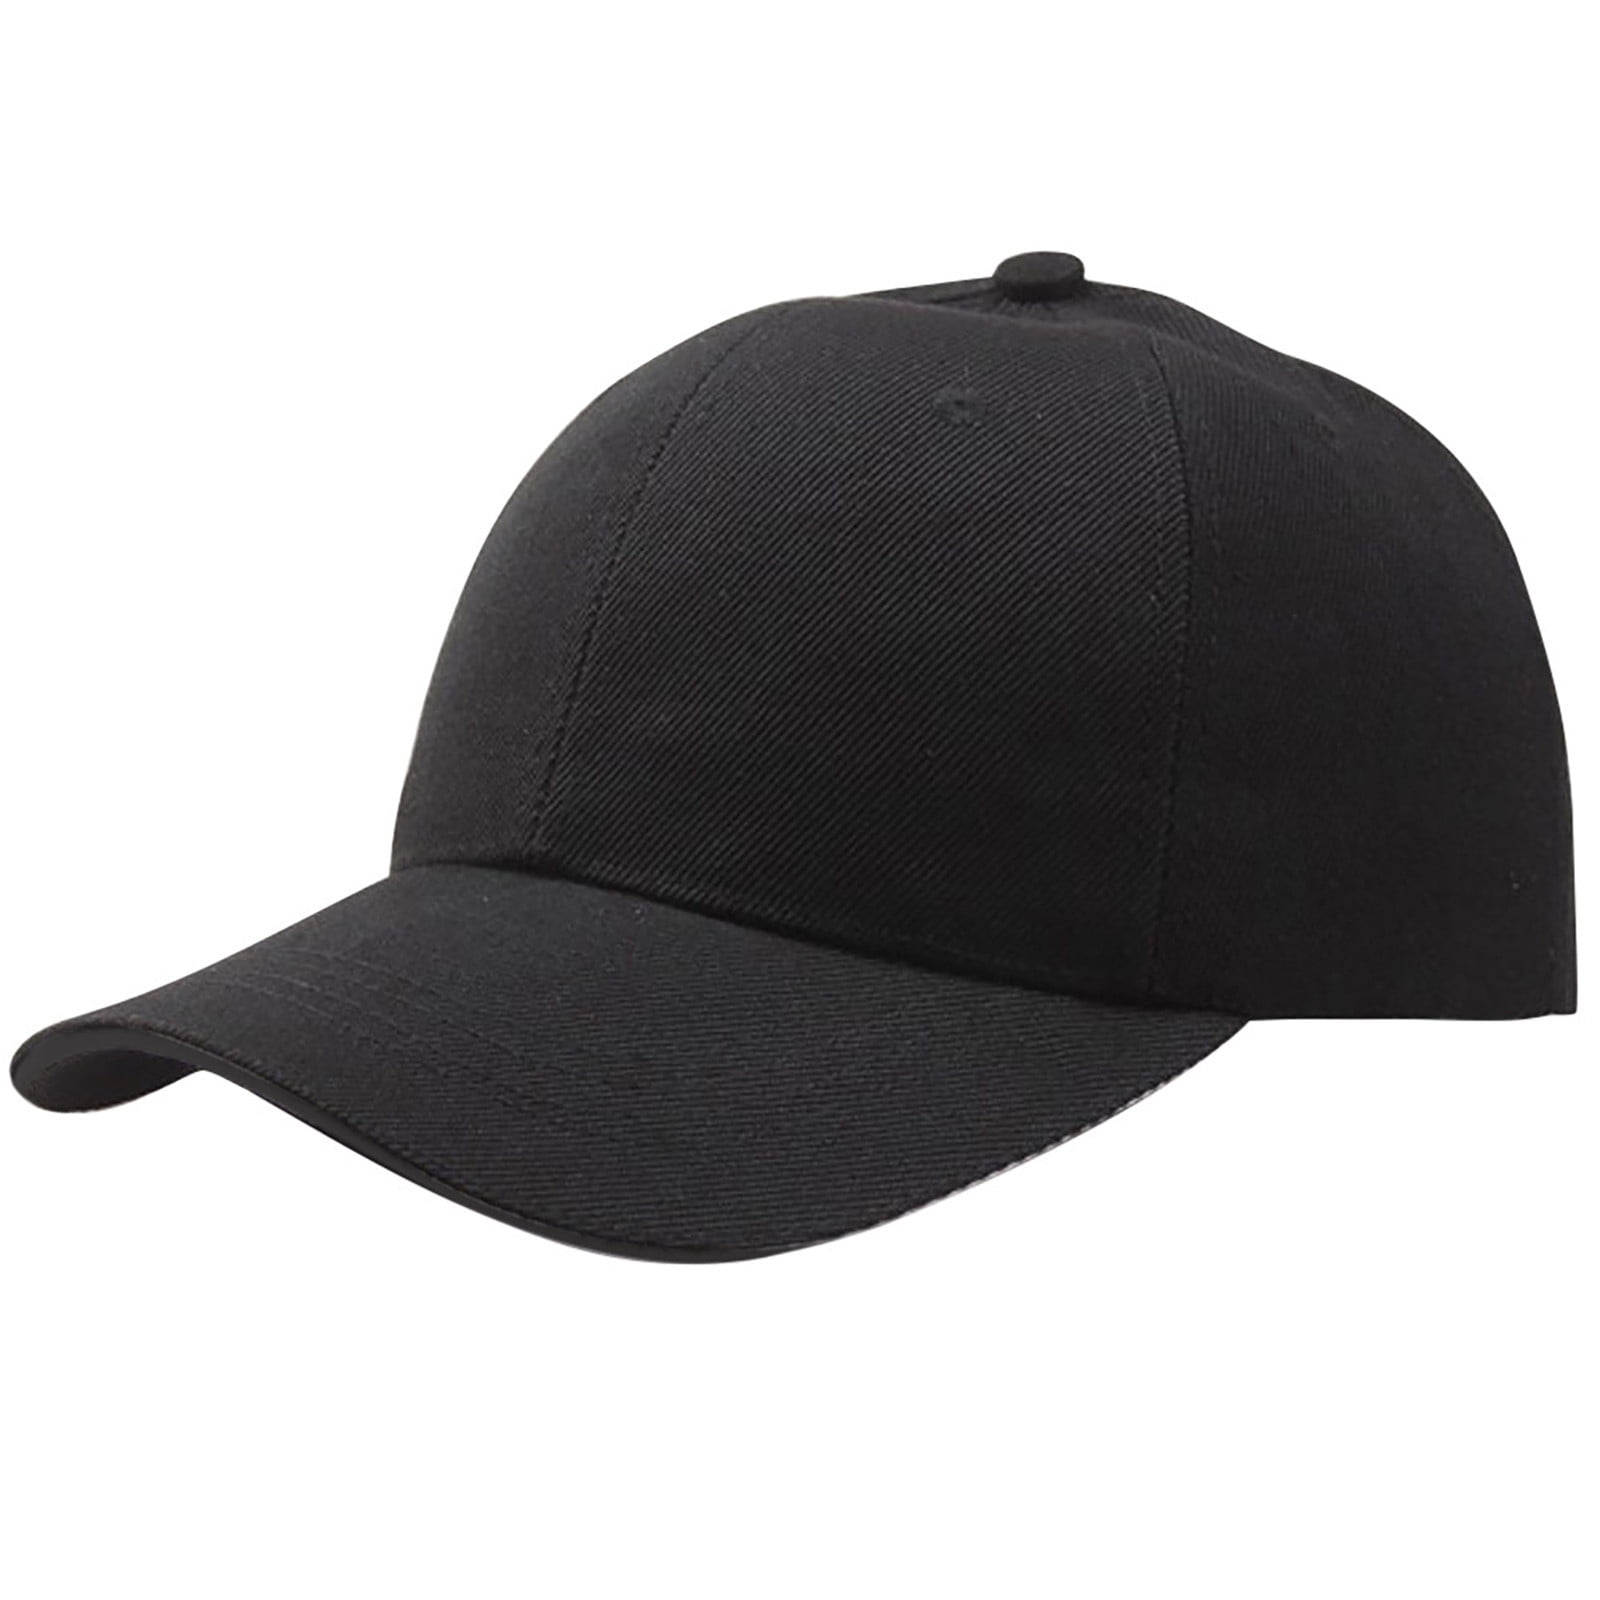 keusn unisex baseball cap vintage washed plain baseball caps adjustable ...